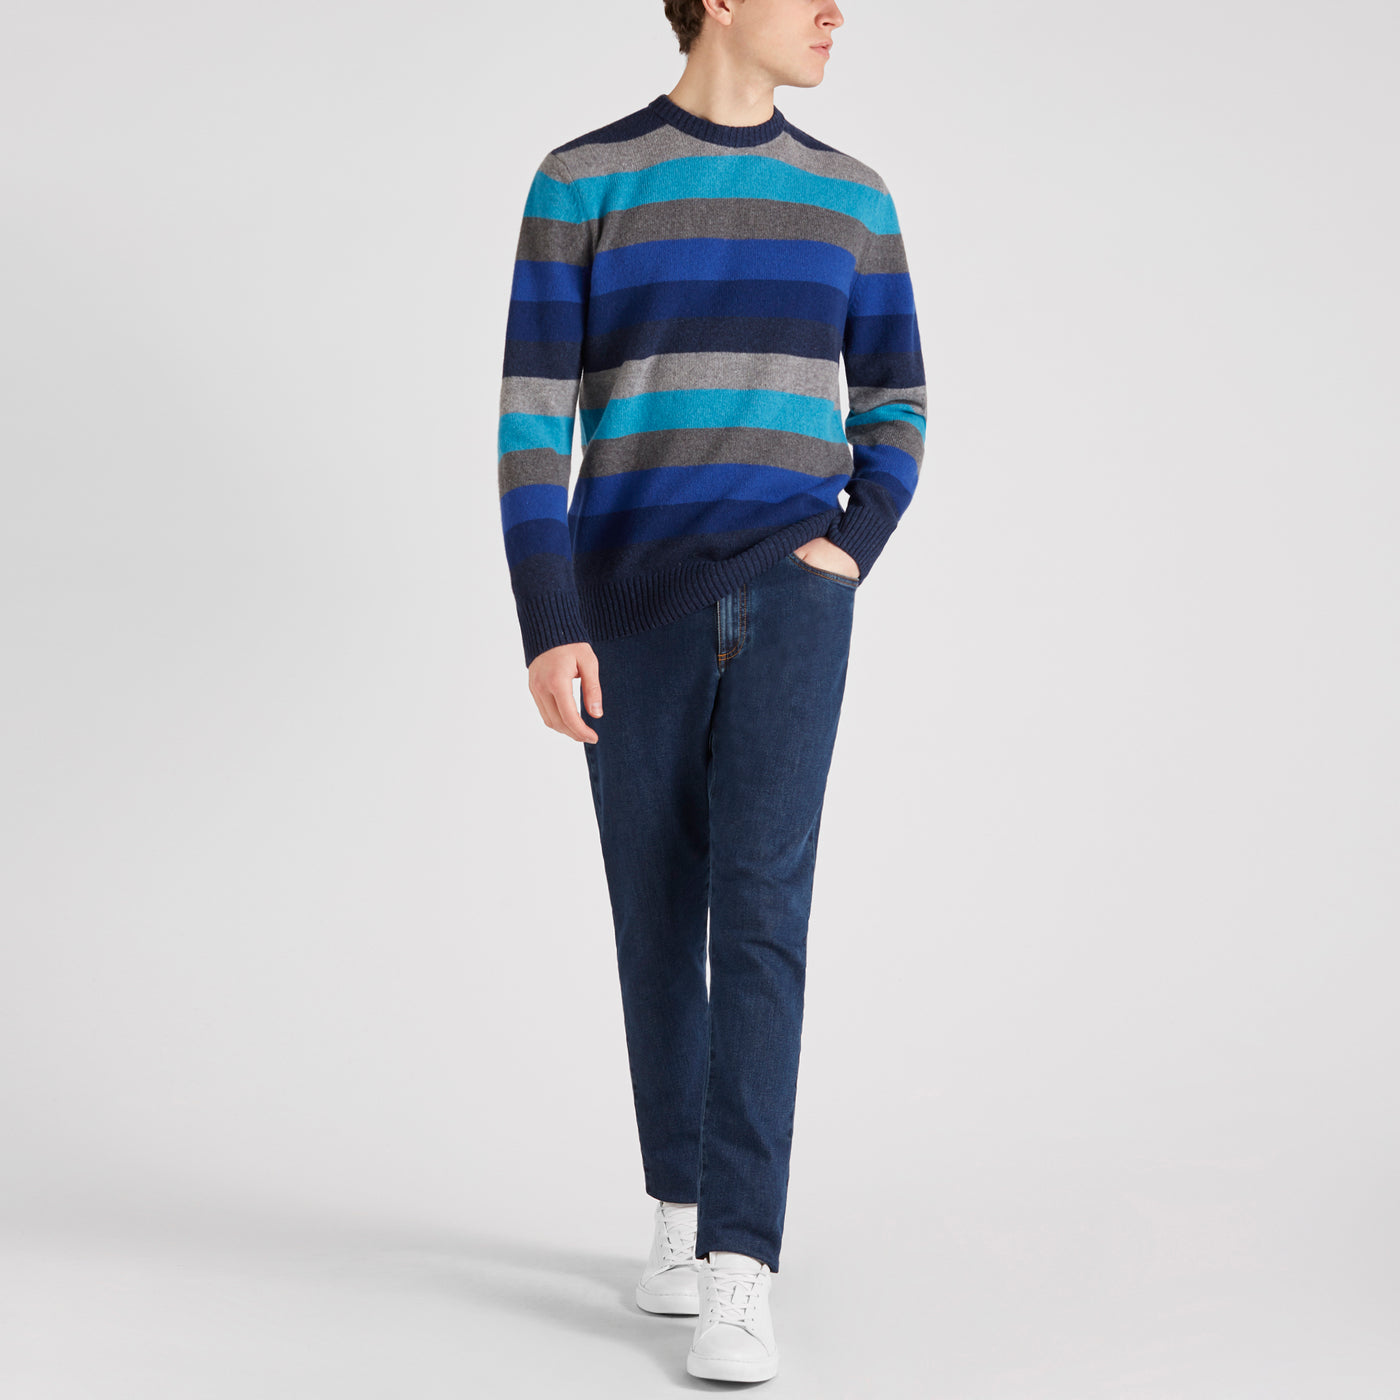 Paul & Shark Sweater Wool Crewneck With Stripes | Blue / Navy / Grey